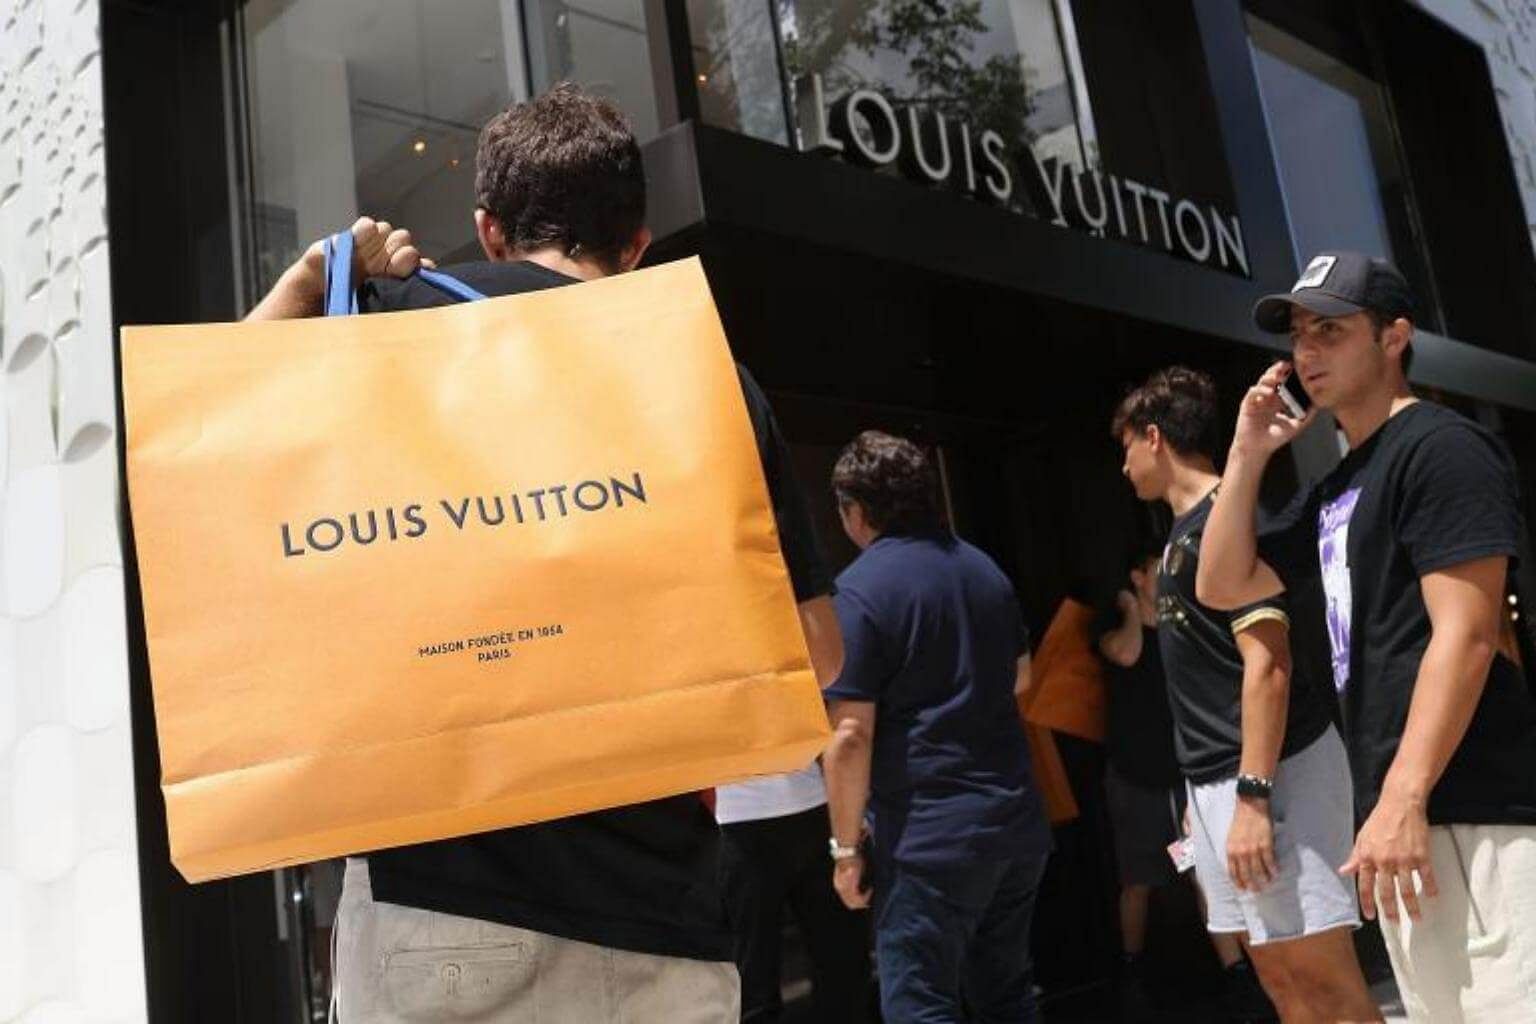 Louis Vuitton Announces the $2,450 Tambour Horizon